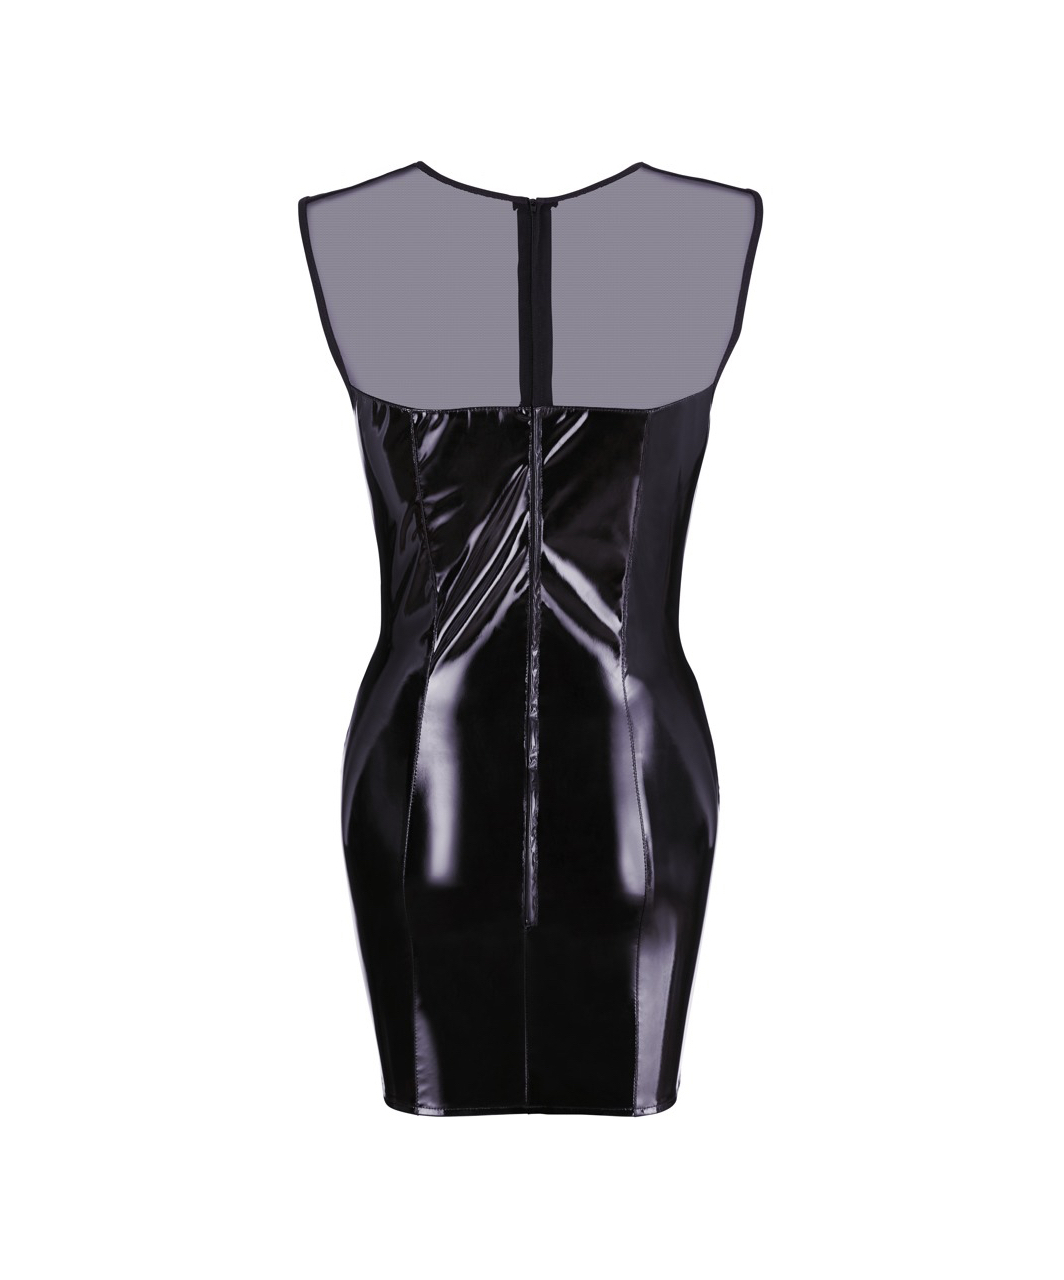 Black Level black vinyl mini dress with net mesh top